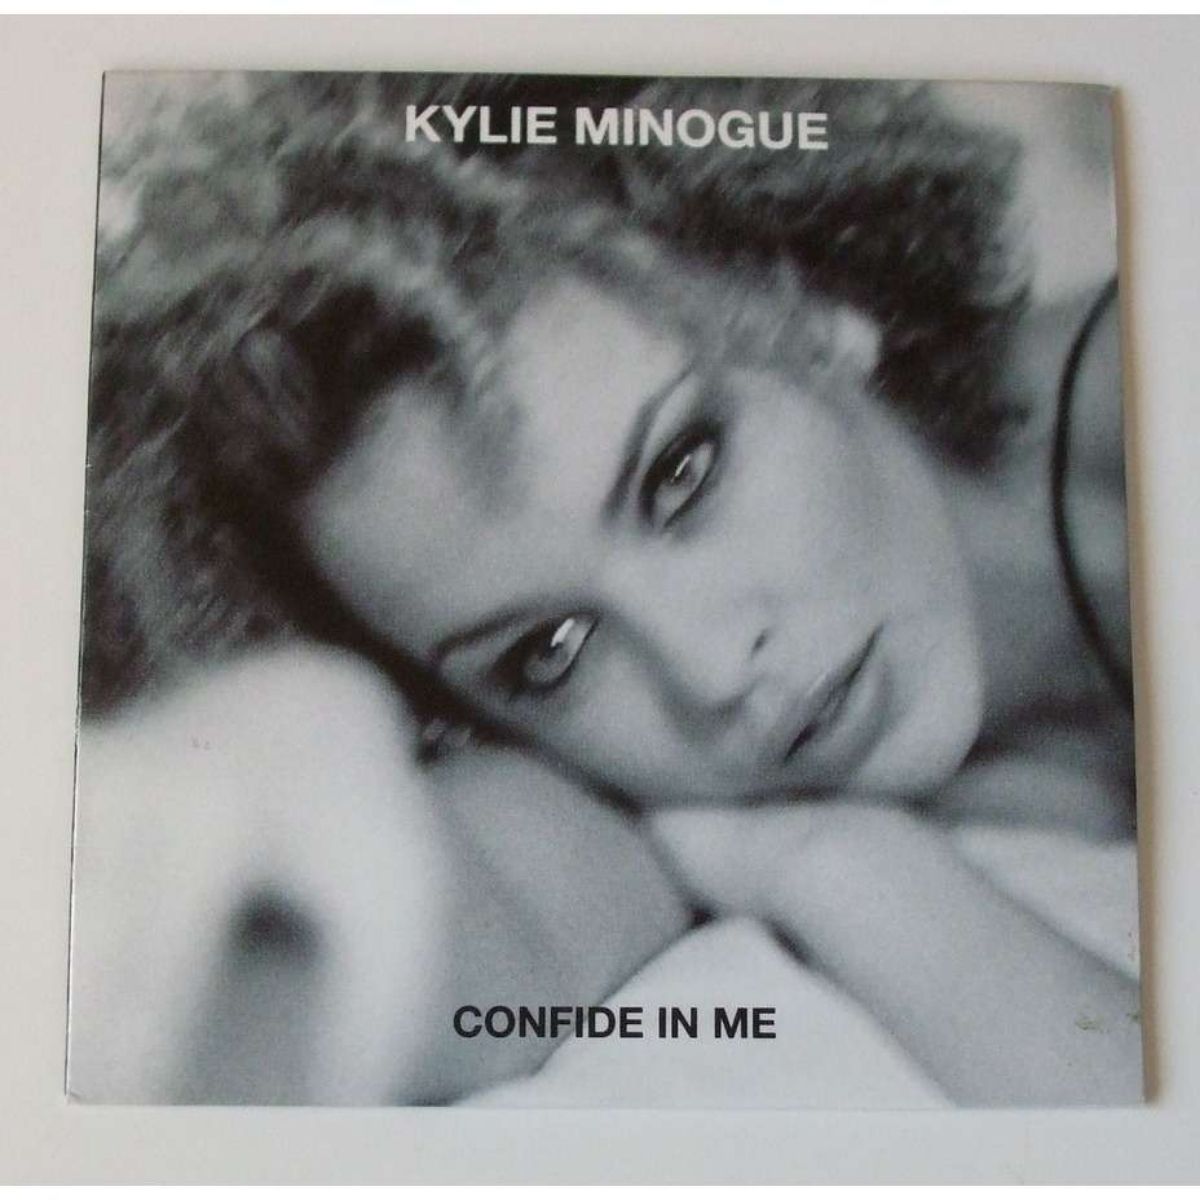 Kylie Minogue's "Confide In Me" album cover